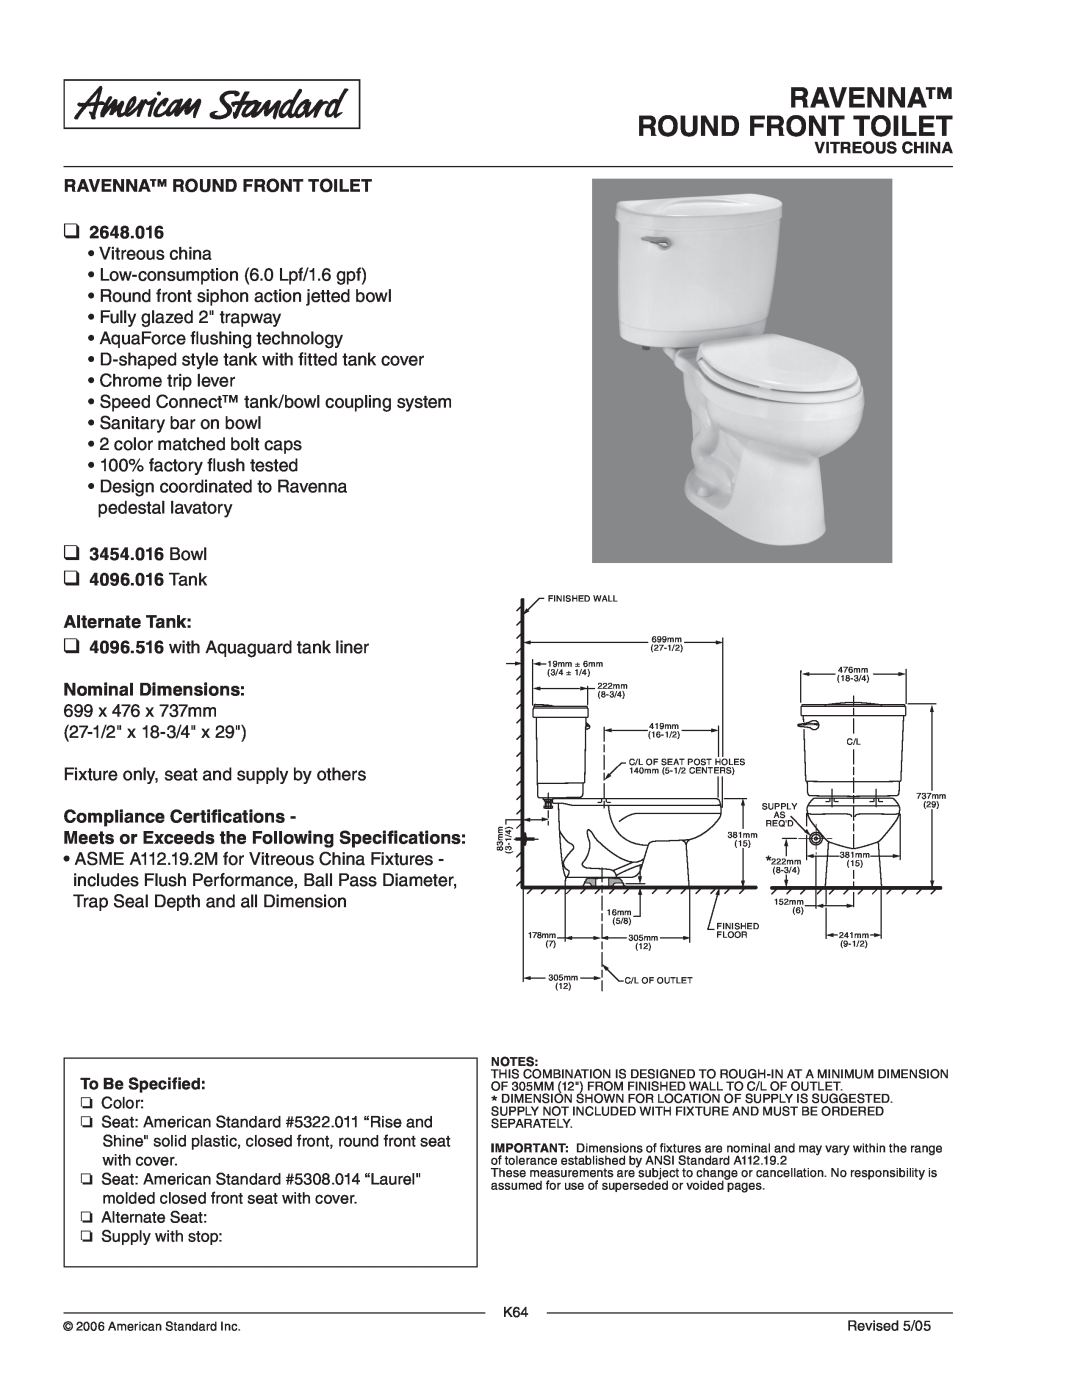 American Standard dimensions Ravenna Round Front Toilet, Bowl 4096.016 Tank, Alternate Tank, Nominal Dimensions 